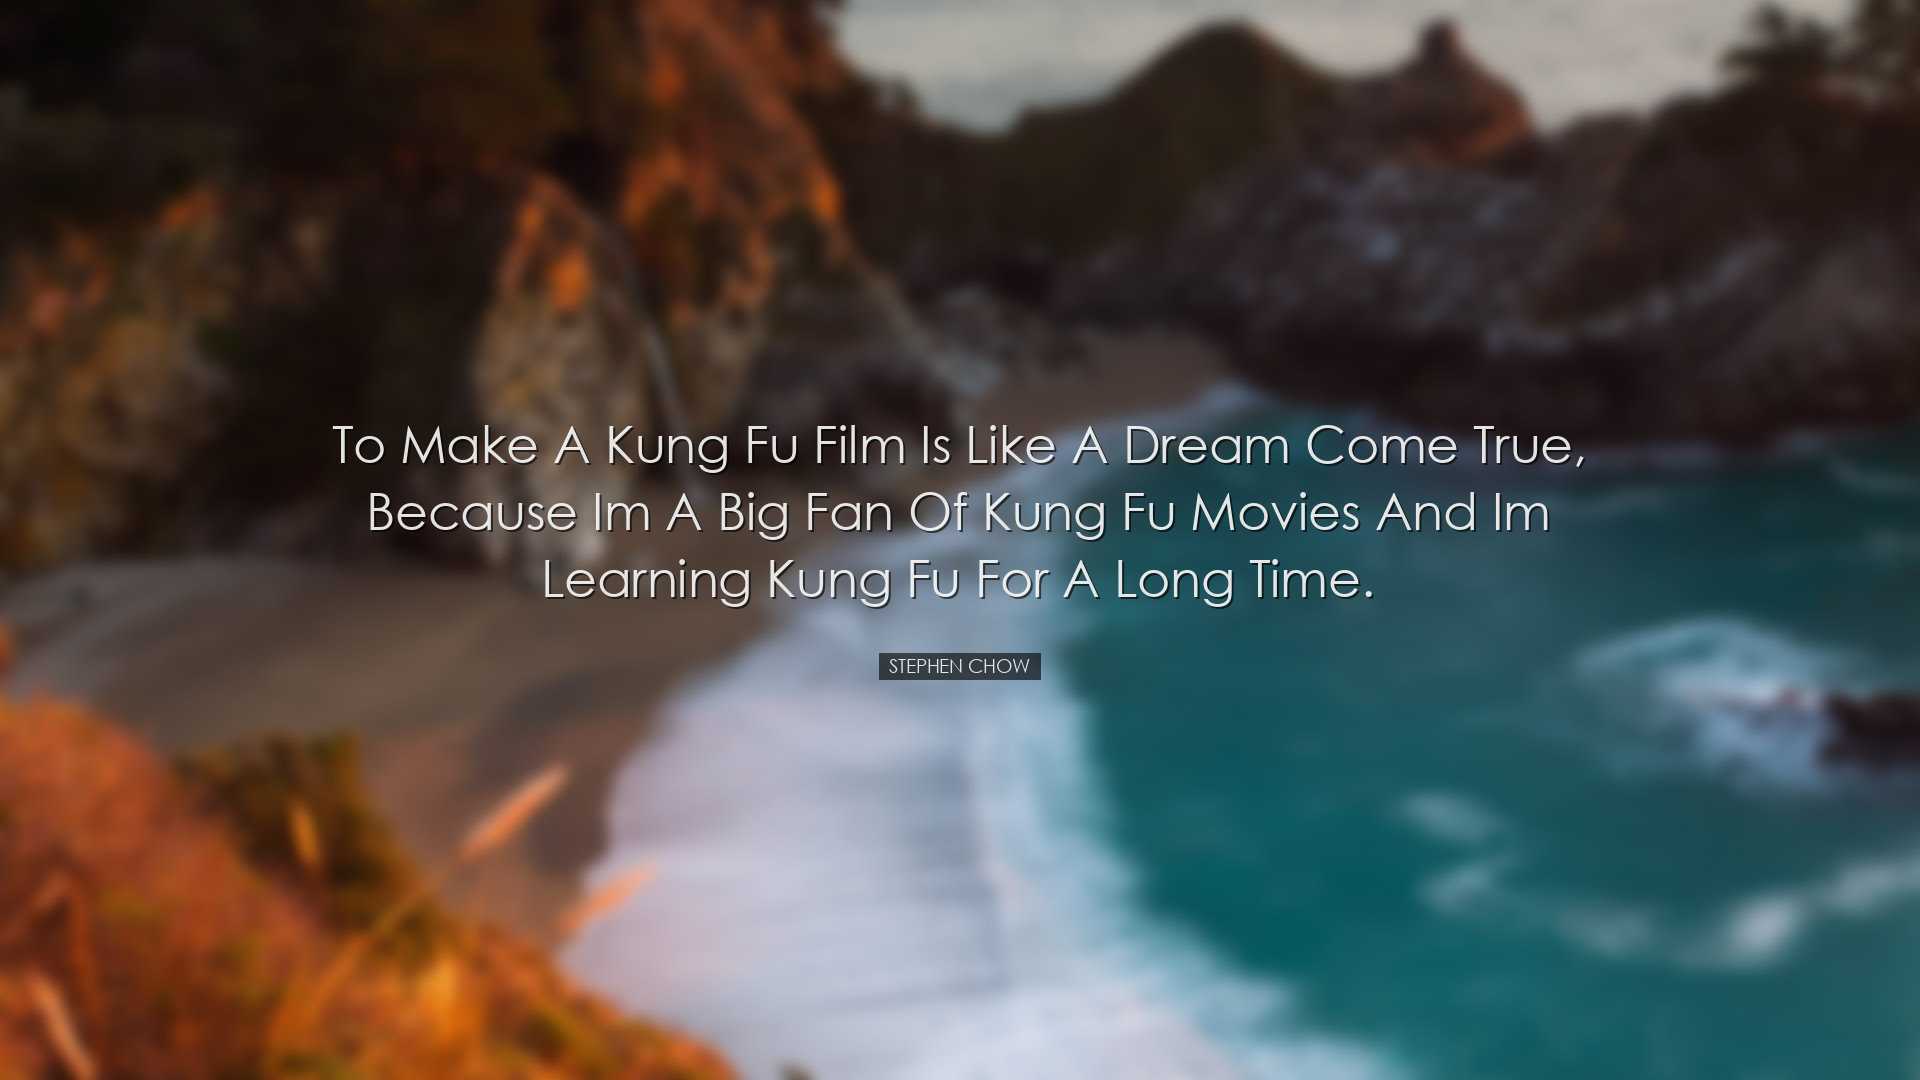 To make a kung fu film is like a dream come true, because Im a big